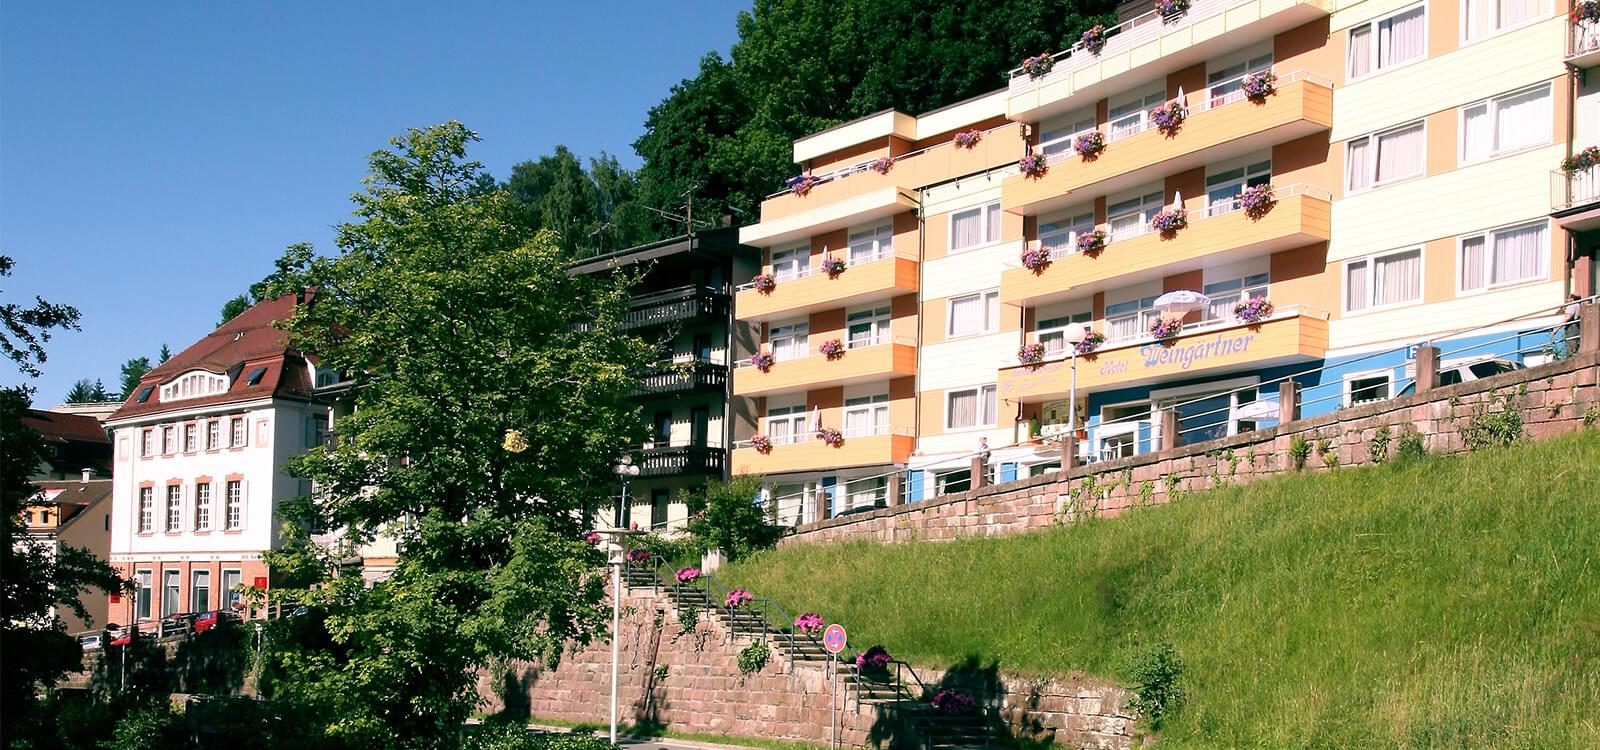 Hotel Weingärtner in Bad Wildbad